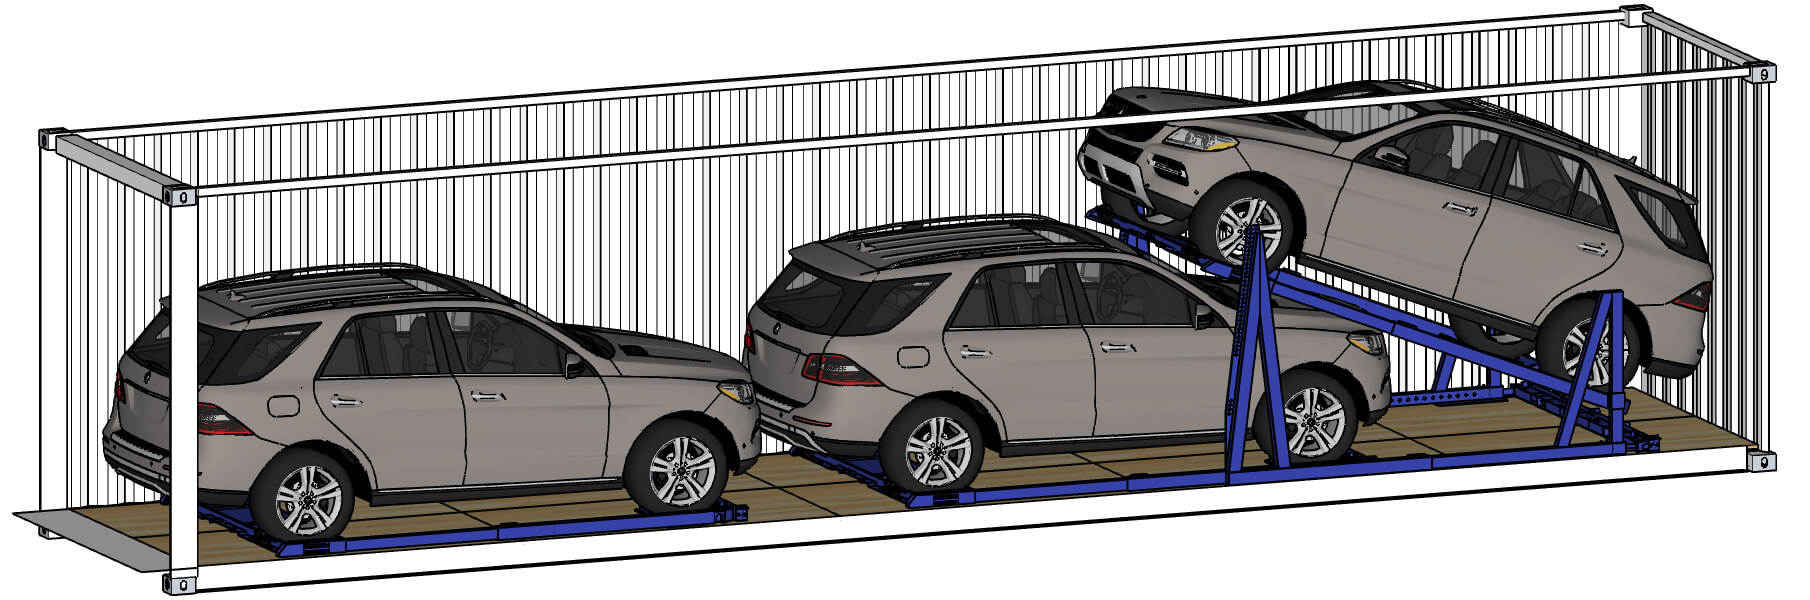 Exterior Loading Car Racking System